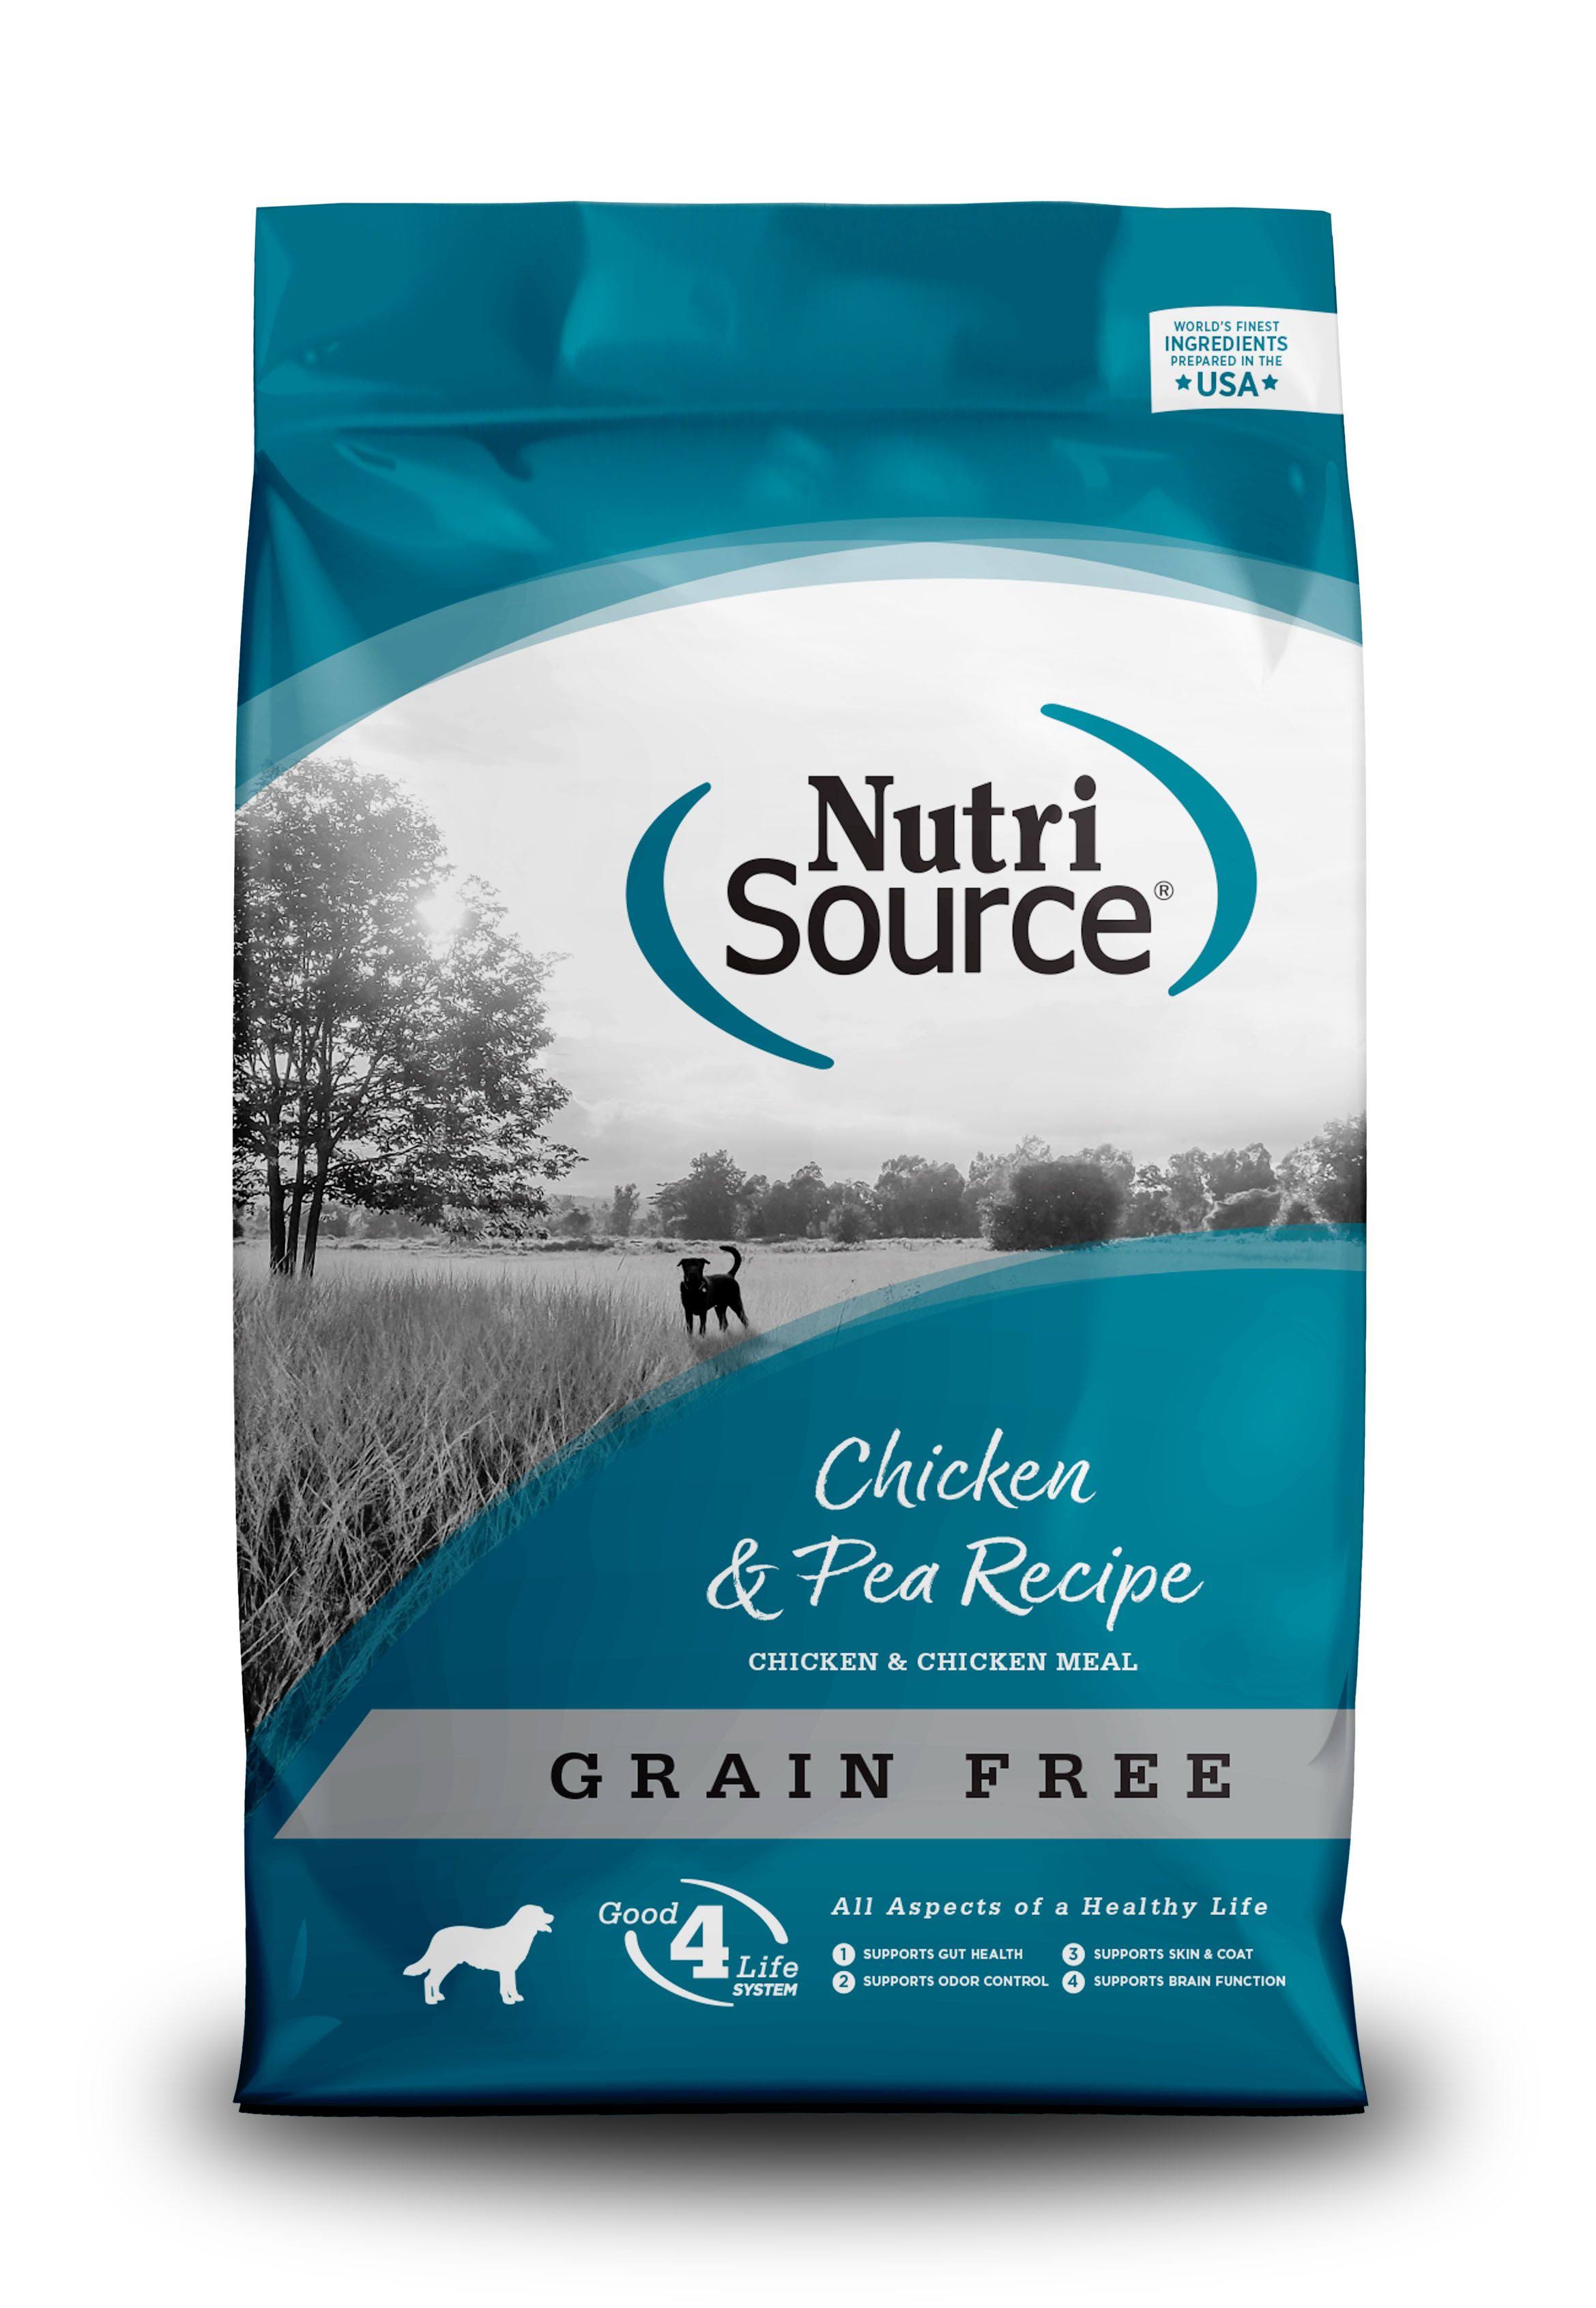 NutriSource Grain Free Chicken & Pea Dry Dog Food, 30-lb